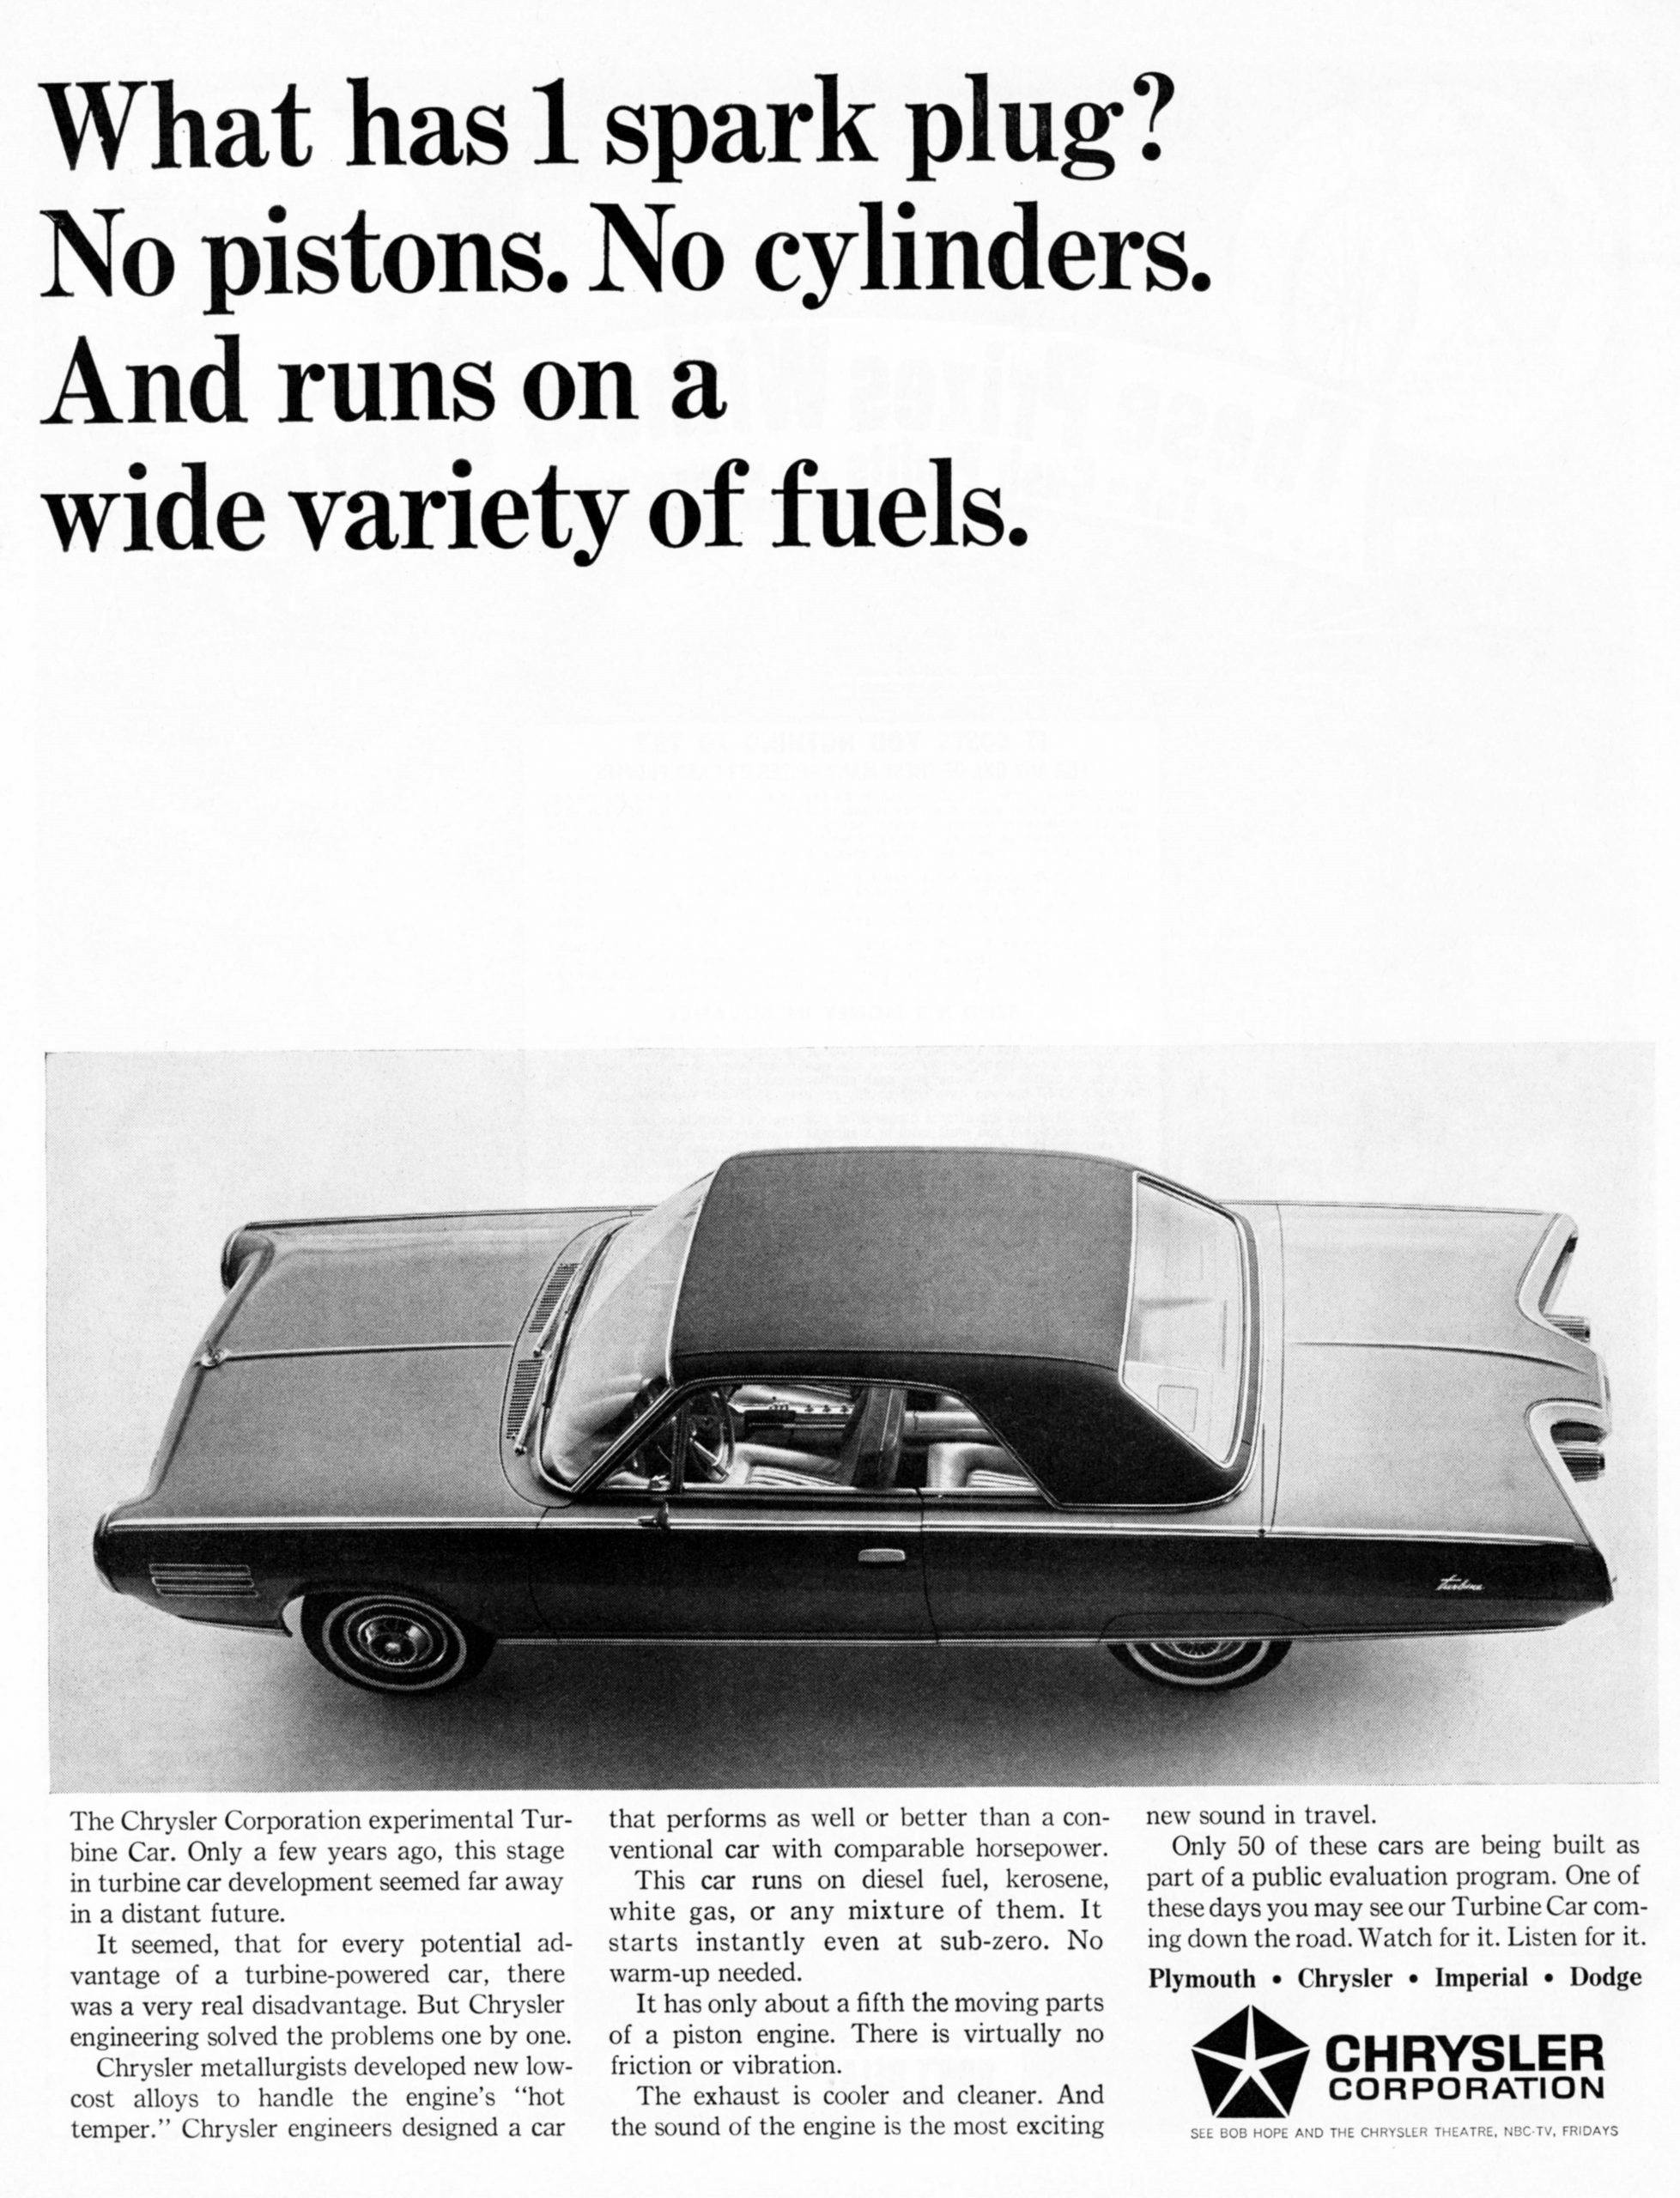 Chrysler Turbine history - 1964 Chrysler Turbine Ad